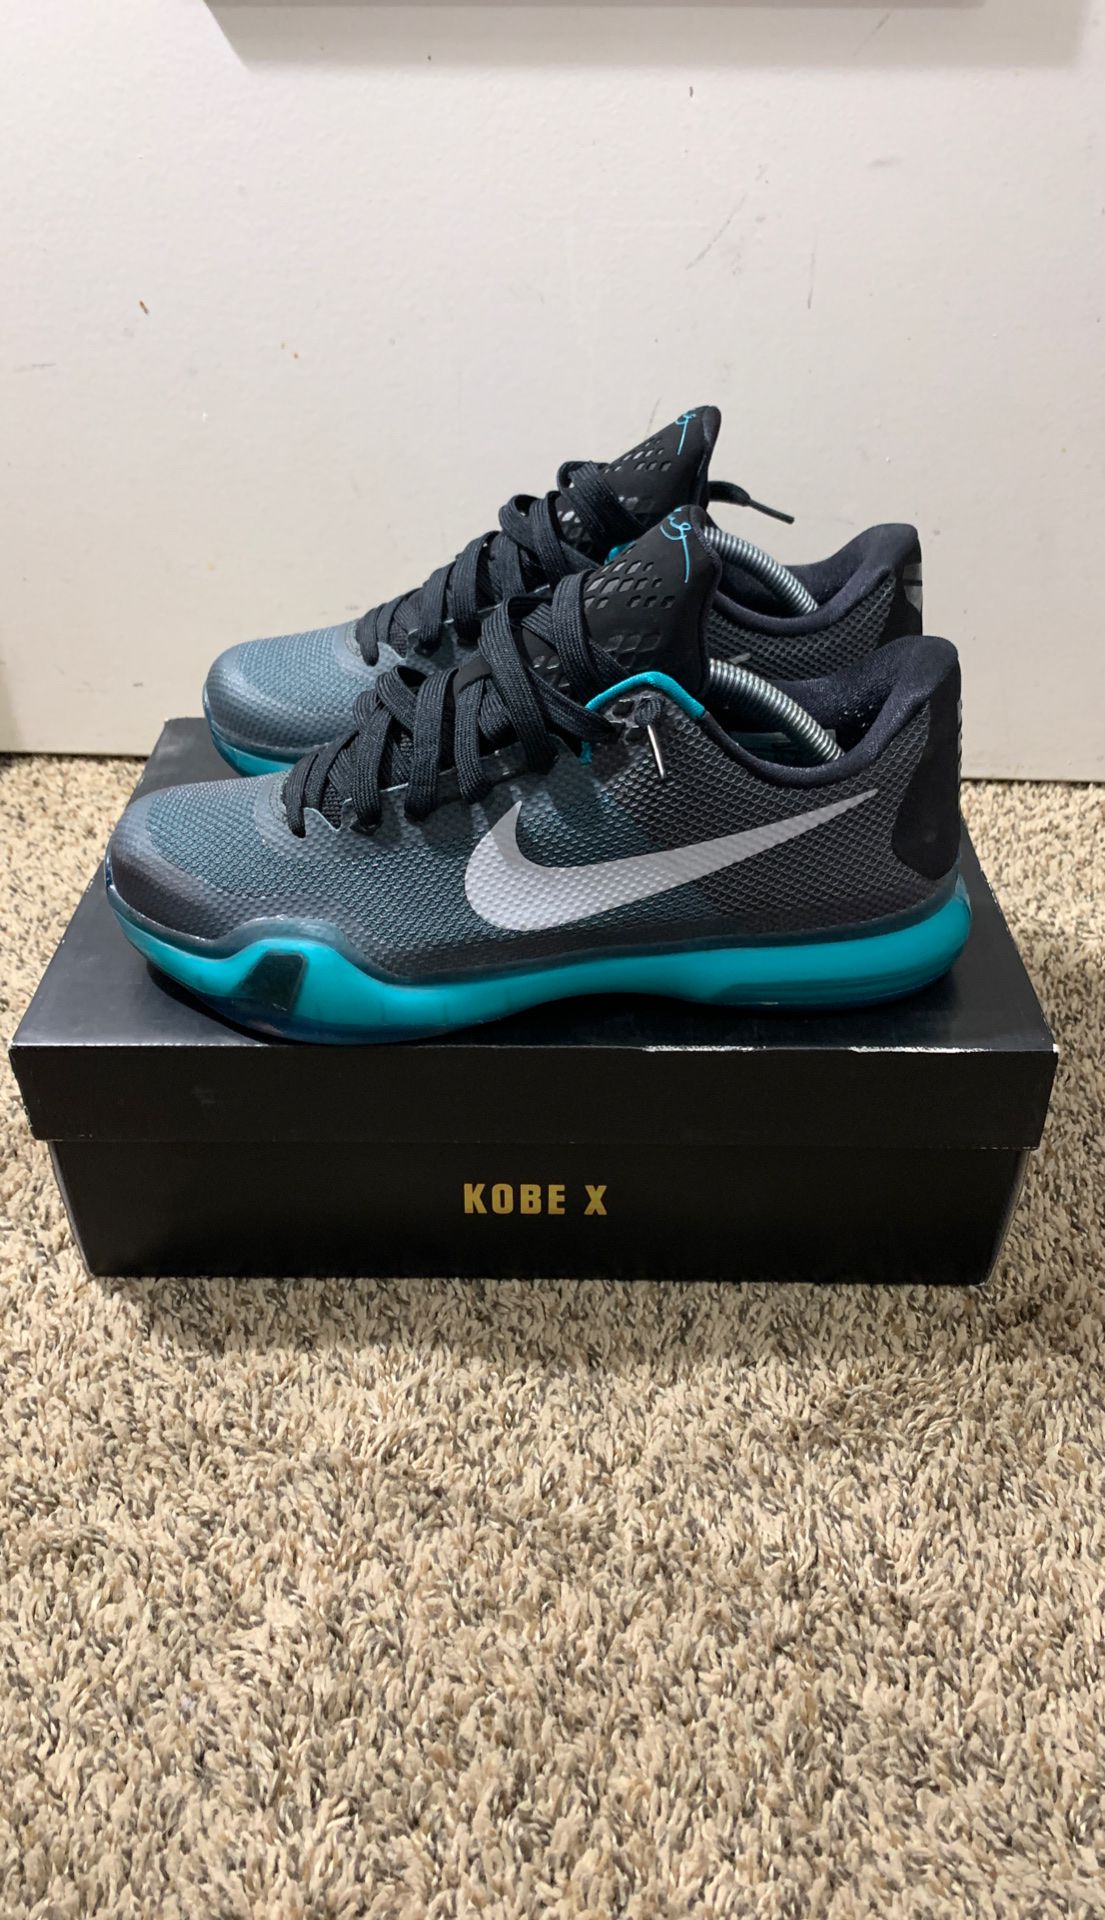 Nike Kobe 10s size 9.5